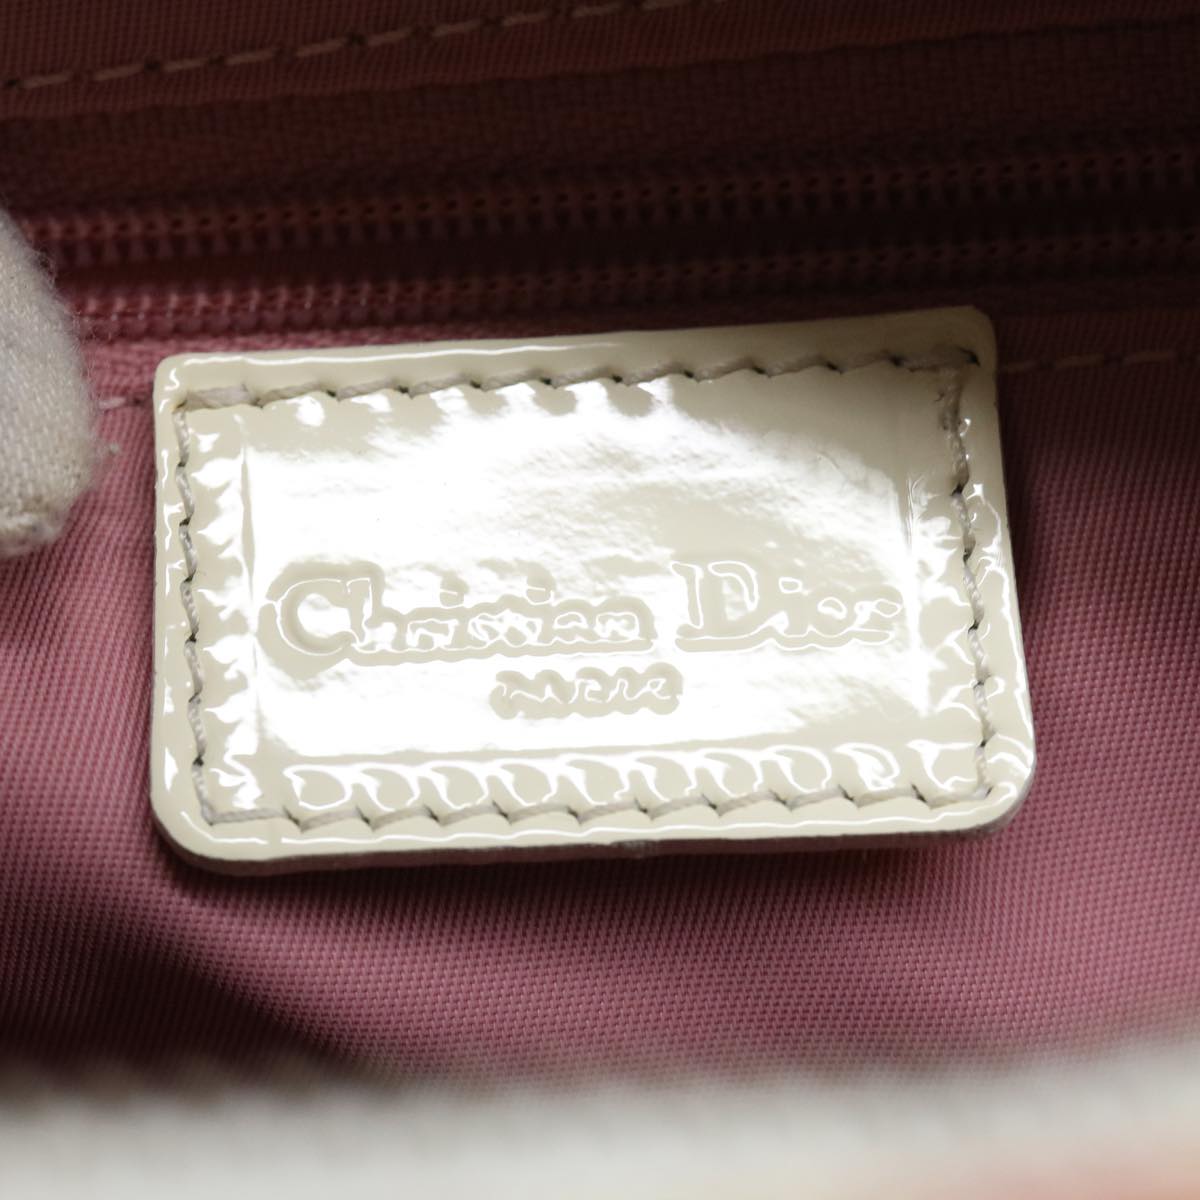 Christian Dior Trotter Canvas Shoulder Bag Pink Auth rd2419